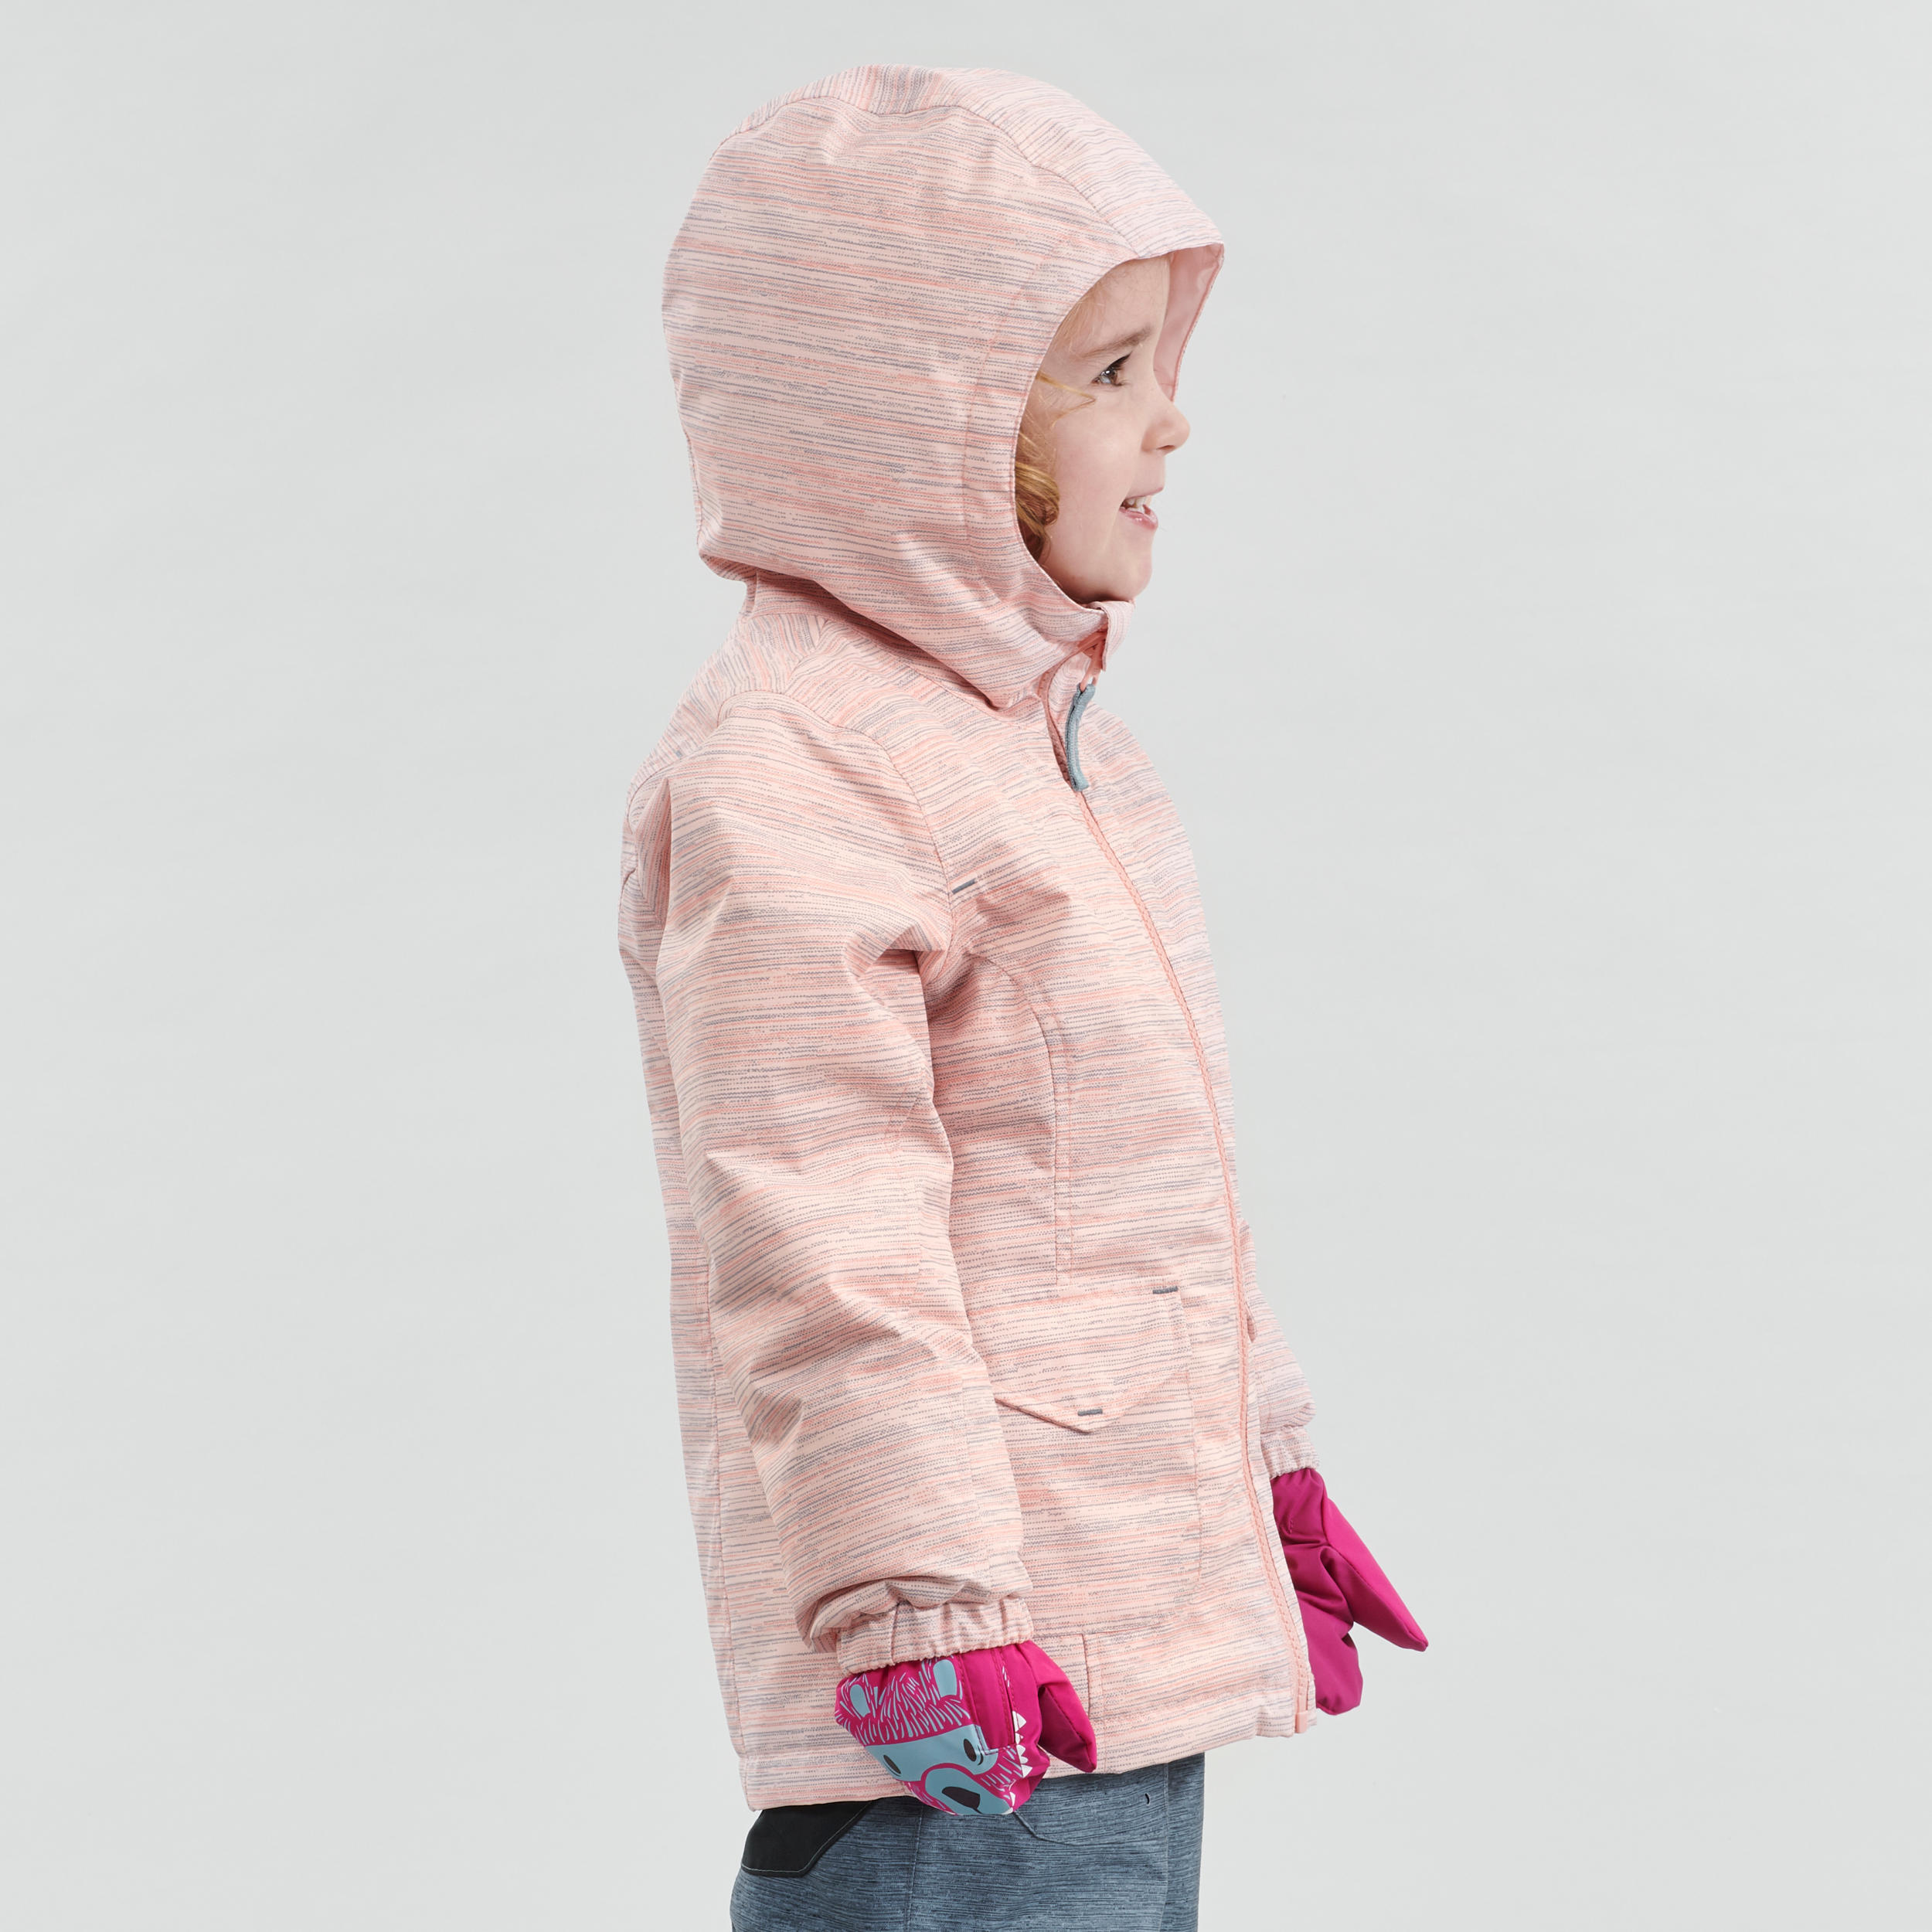 Kids’ Waterproof Winter Hiking Jacket SH100 Warm 2-6 Years 3/7